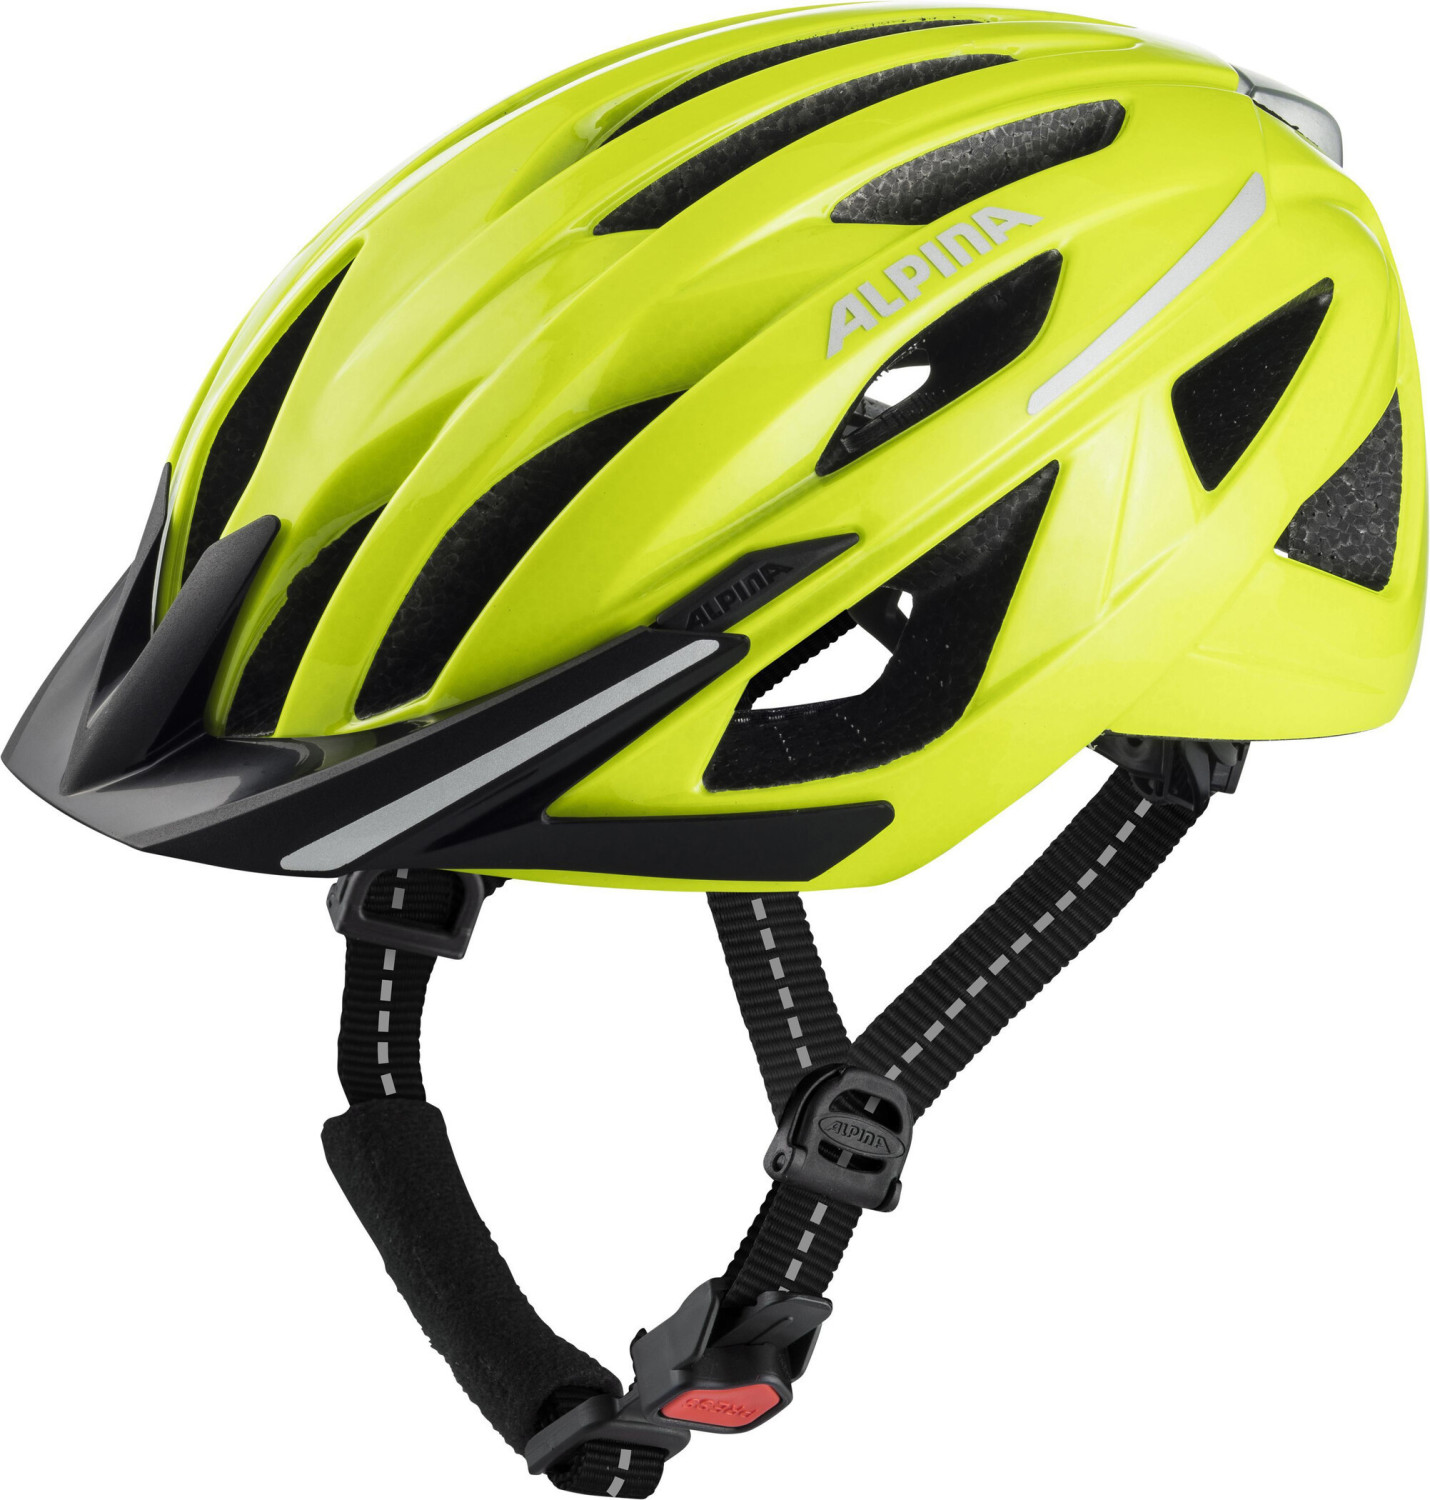 Photos - Bike Helmet Alpina Sports Alpina Sports Haga be visible